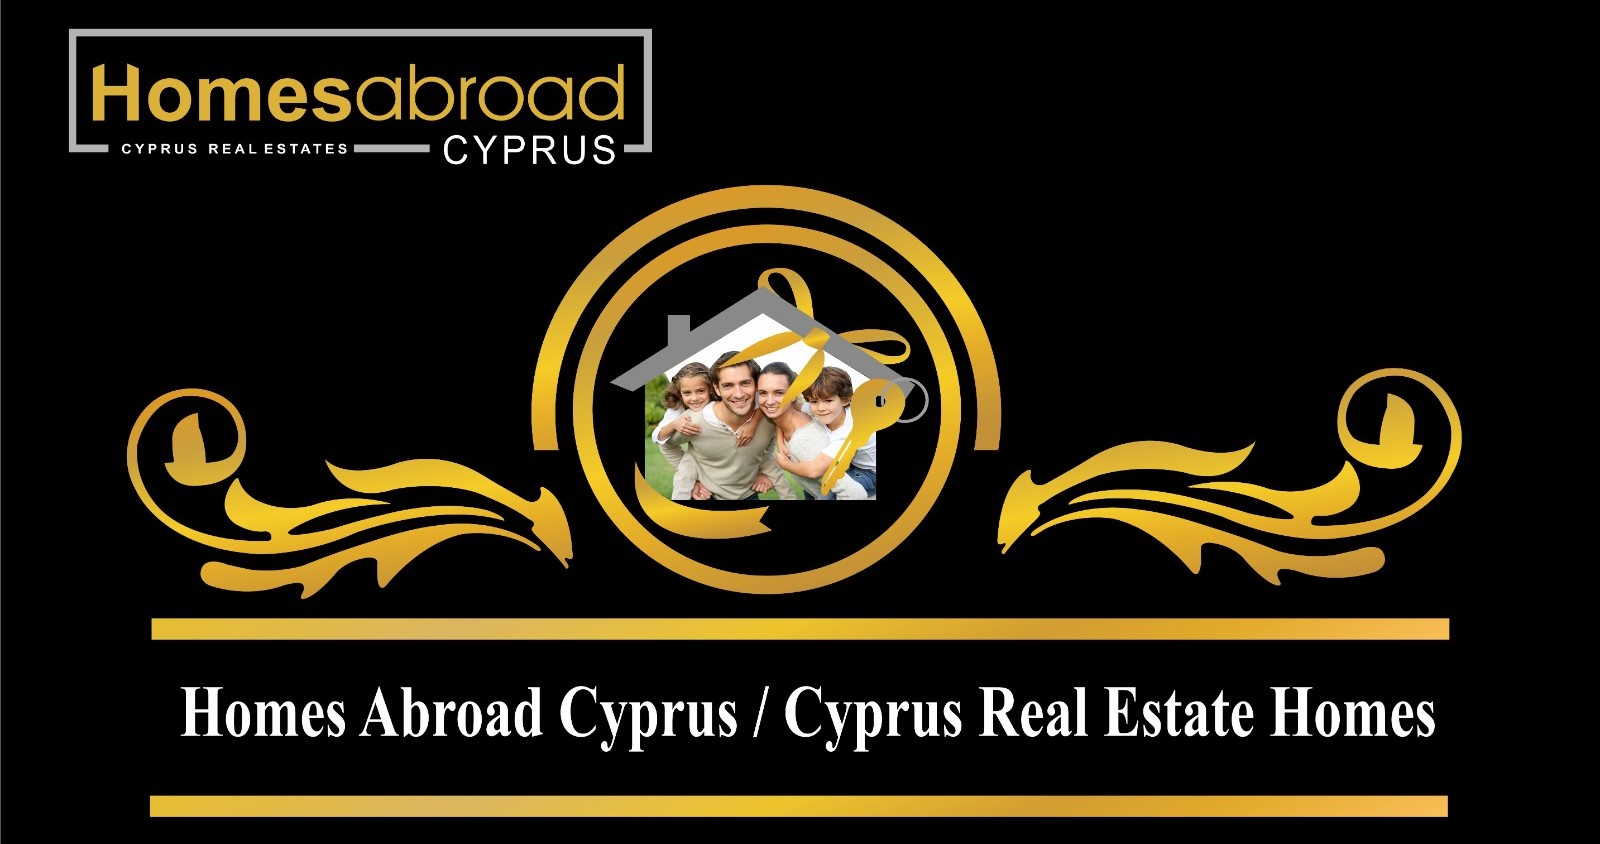 Cyprus Real Estate Homes